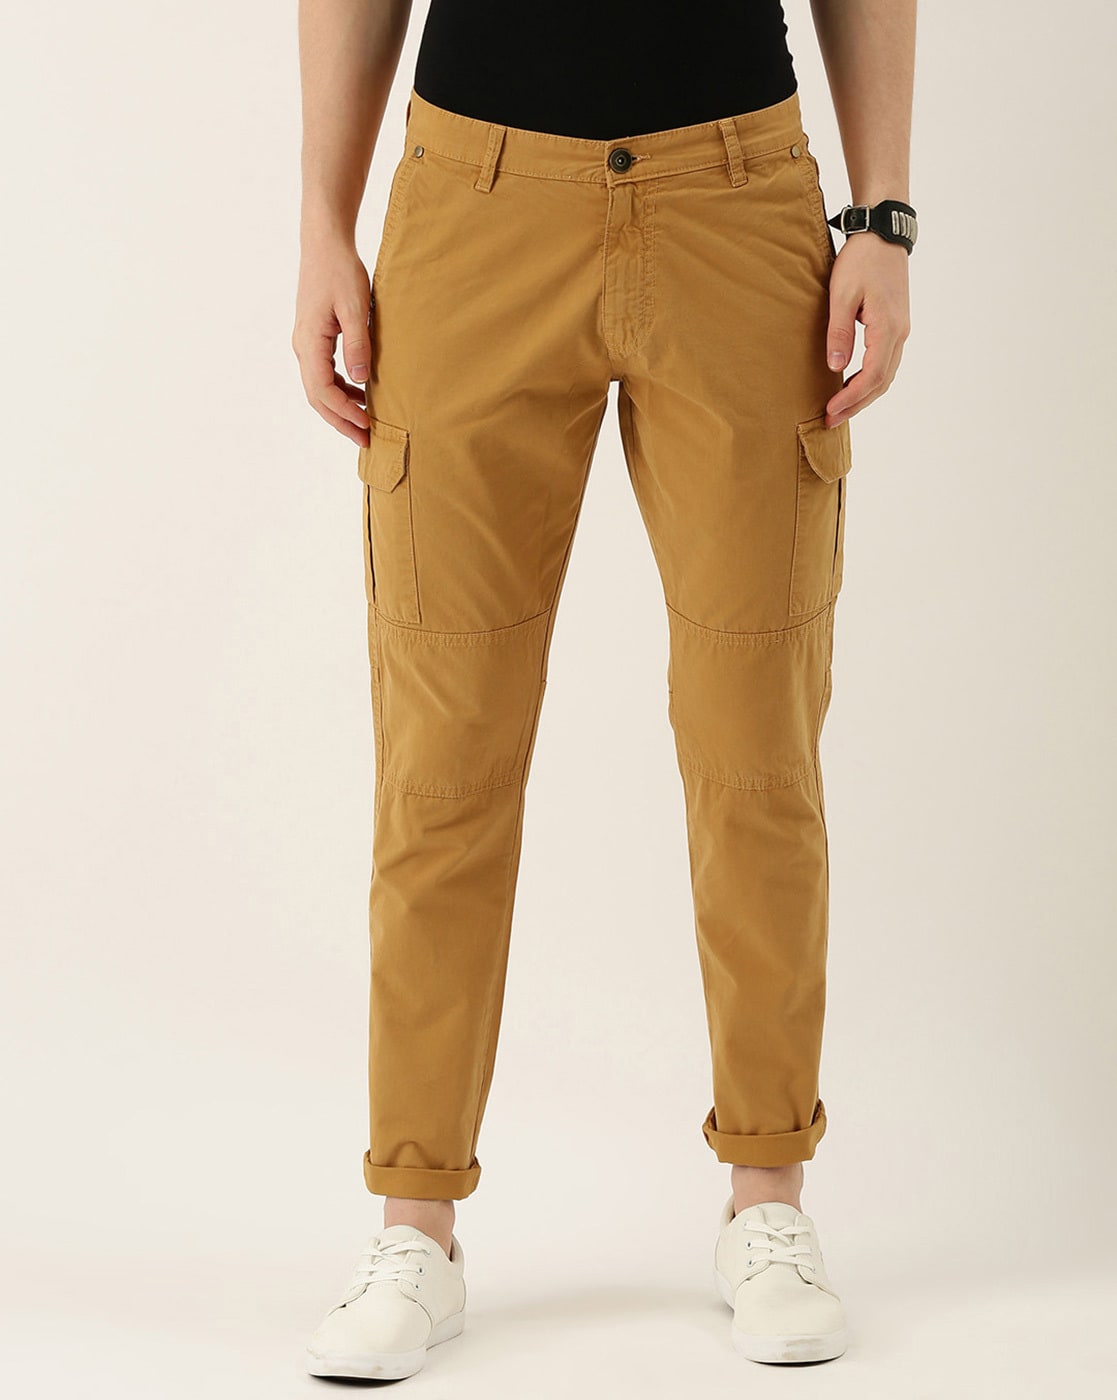 Mens Cargo Pants Khaki Military Men Trousers Cotton Tactical Pants Army  Pantalon  eBay